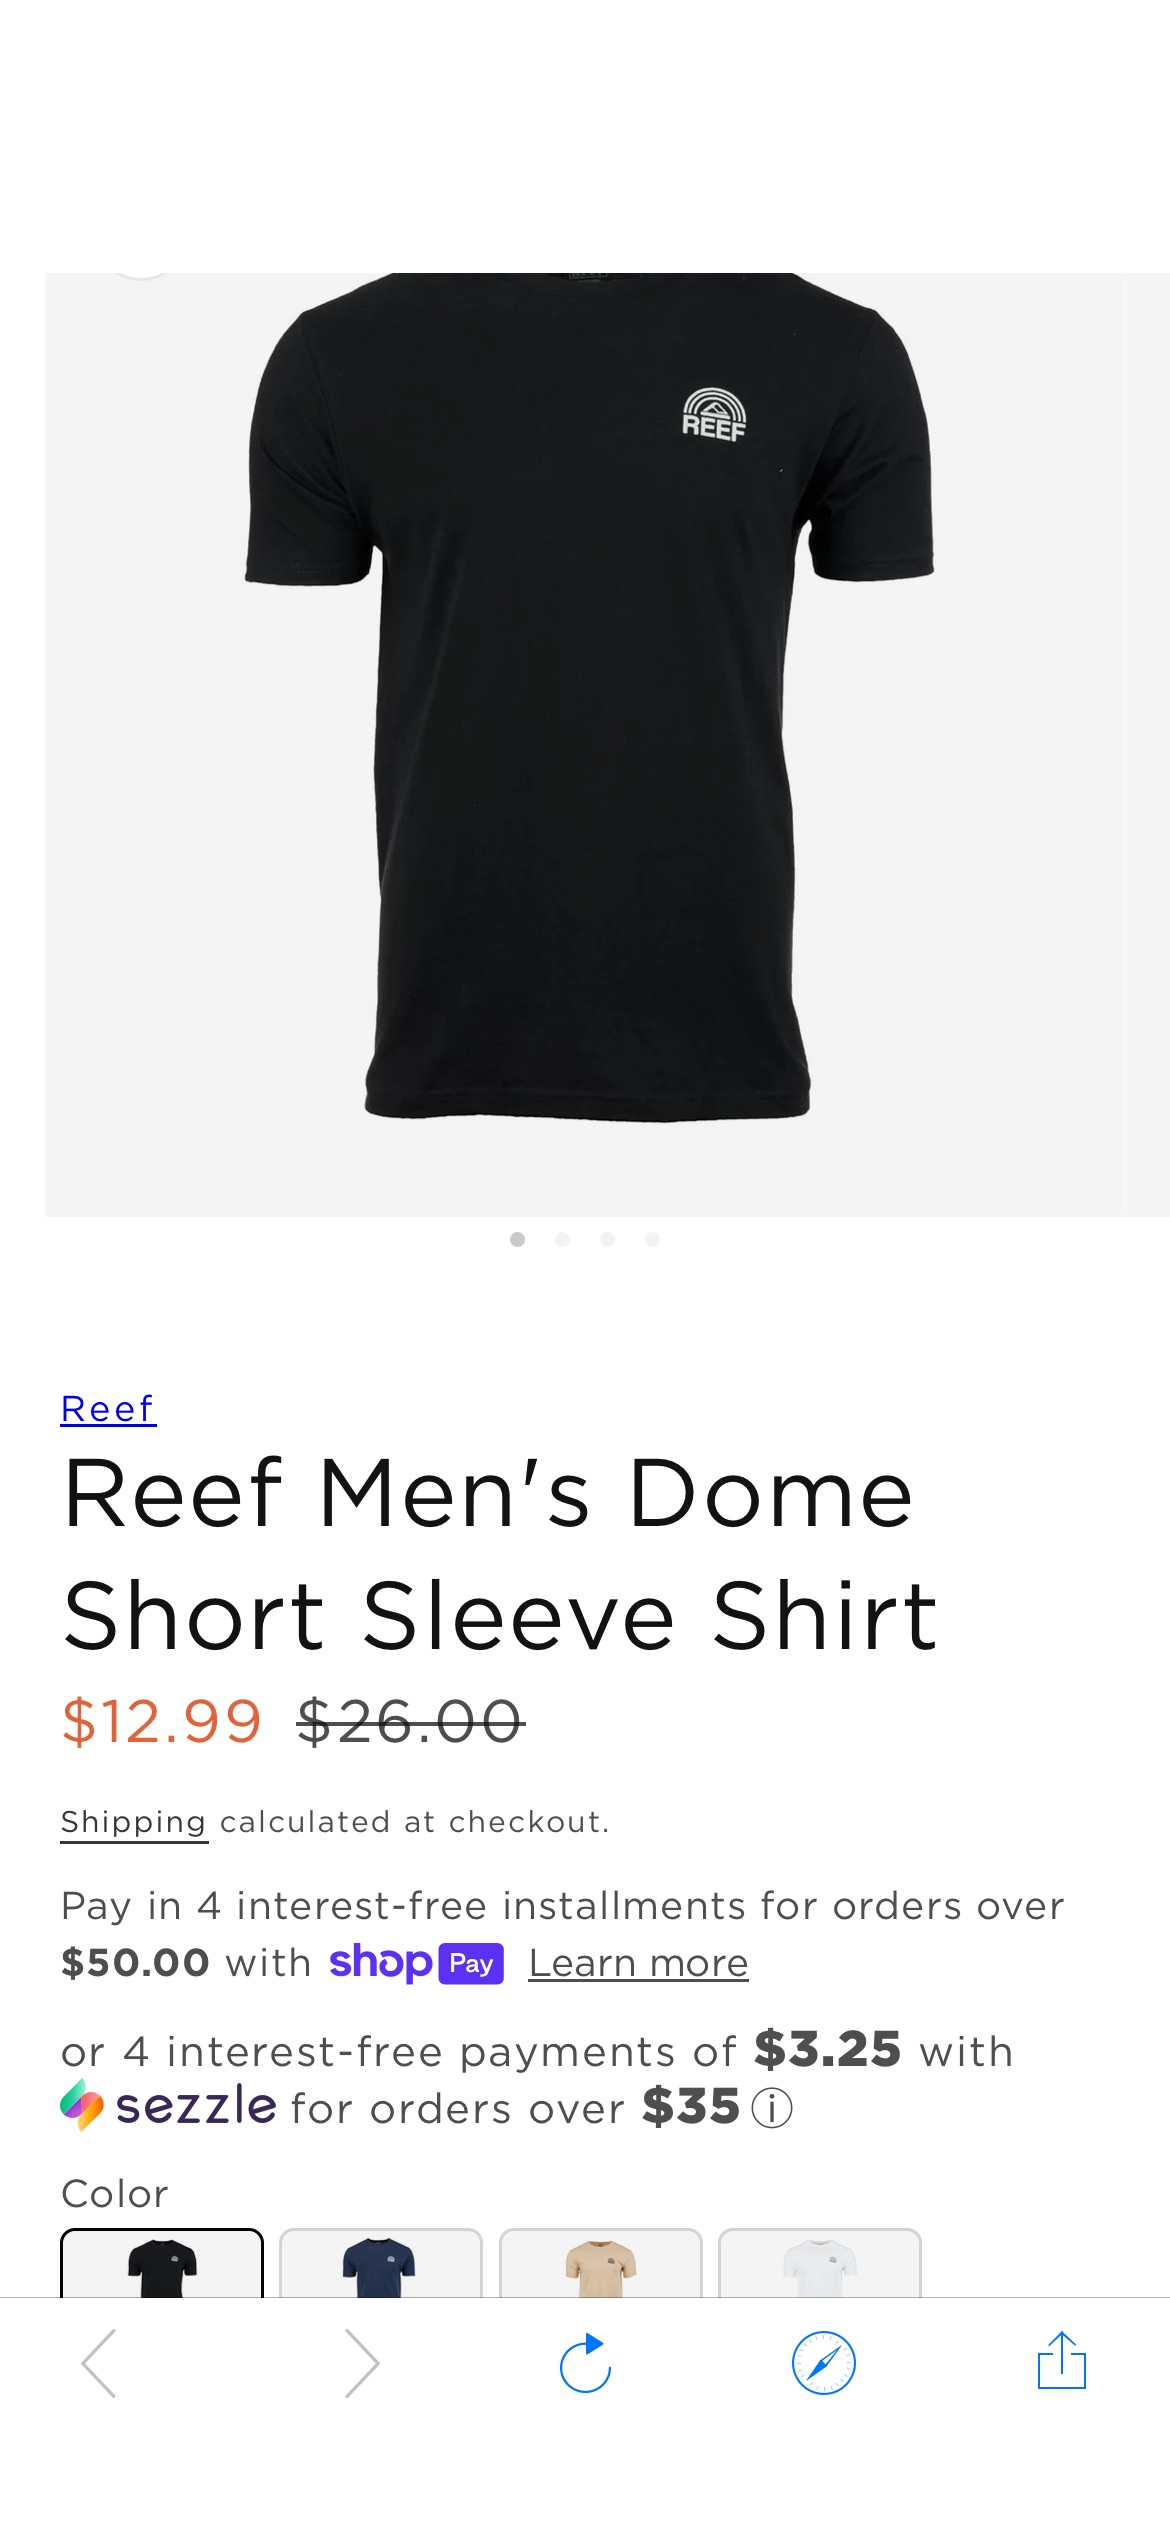 Reef Men's Dome Short Sleeve Shirt – PROOZY Proozy：用3件Reef男士圆顶衬衫改造你的衣柜，只需22美元。

代码：PZR22DM